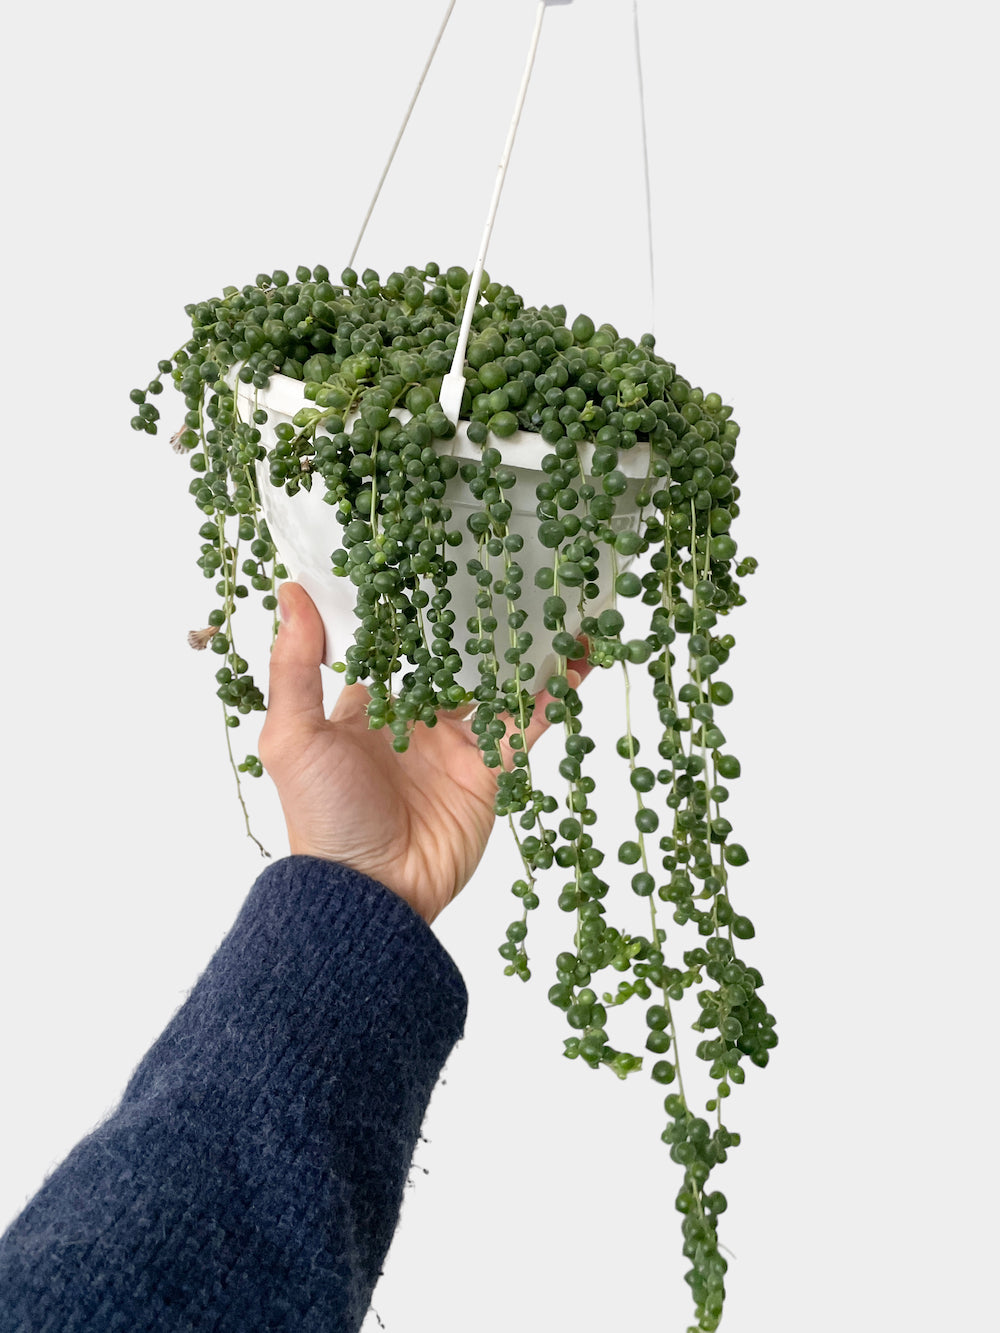 Succulent Plants String of Pearls (Senecio Rowleyanus) Hanging